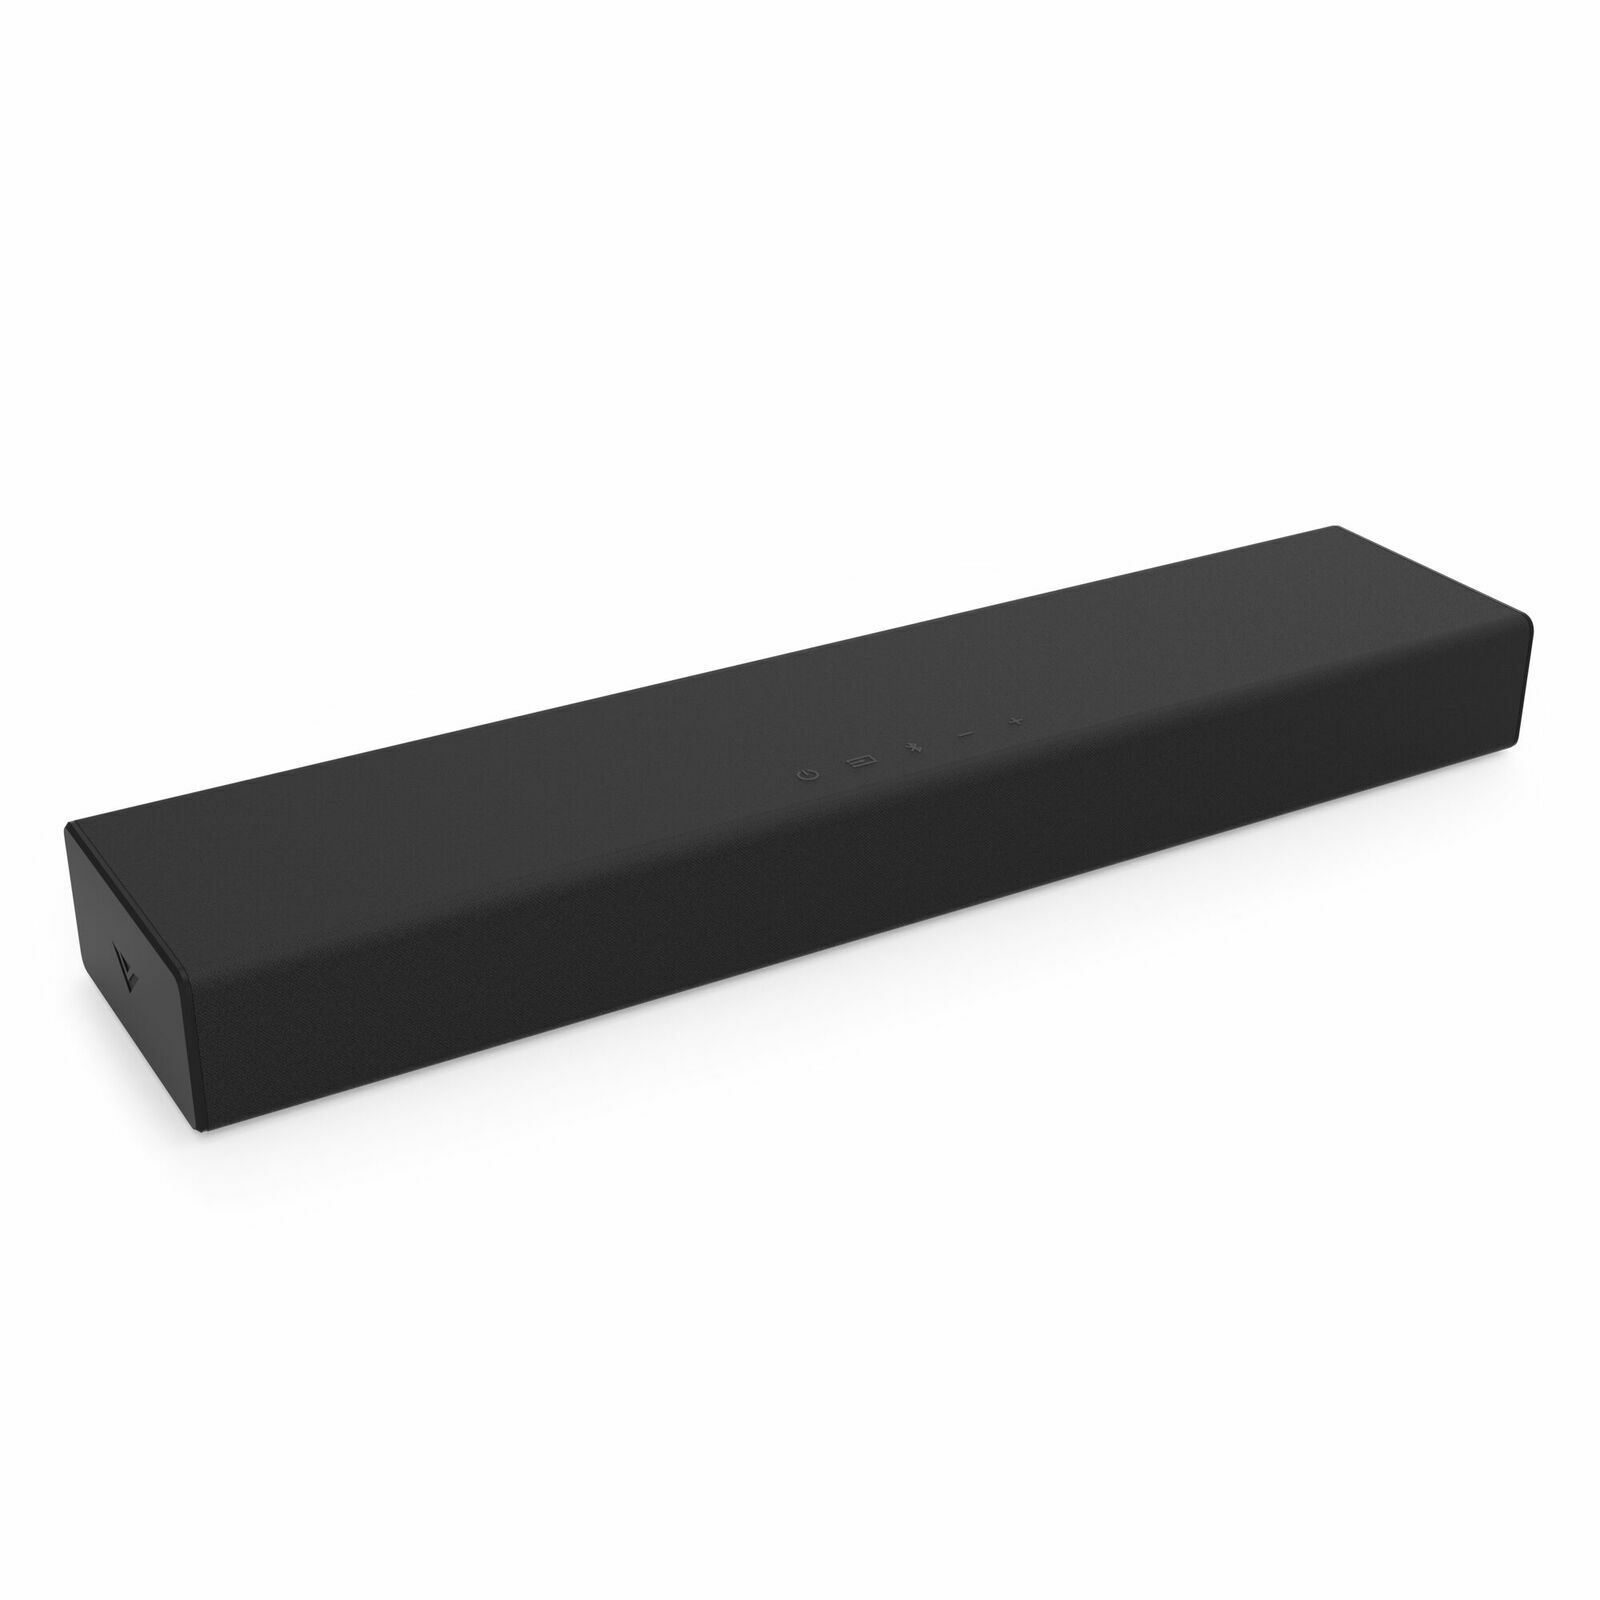 VIZIO 2.0 Bluetooth Sound Bar Speaker - SB2020n-H6 (Certified Refurbished)